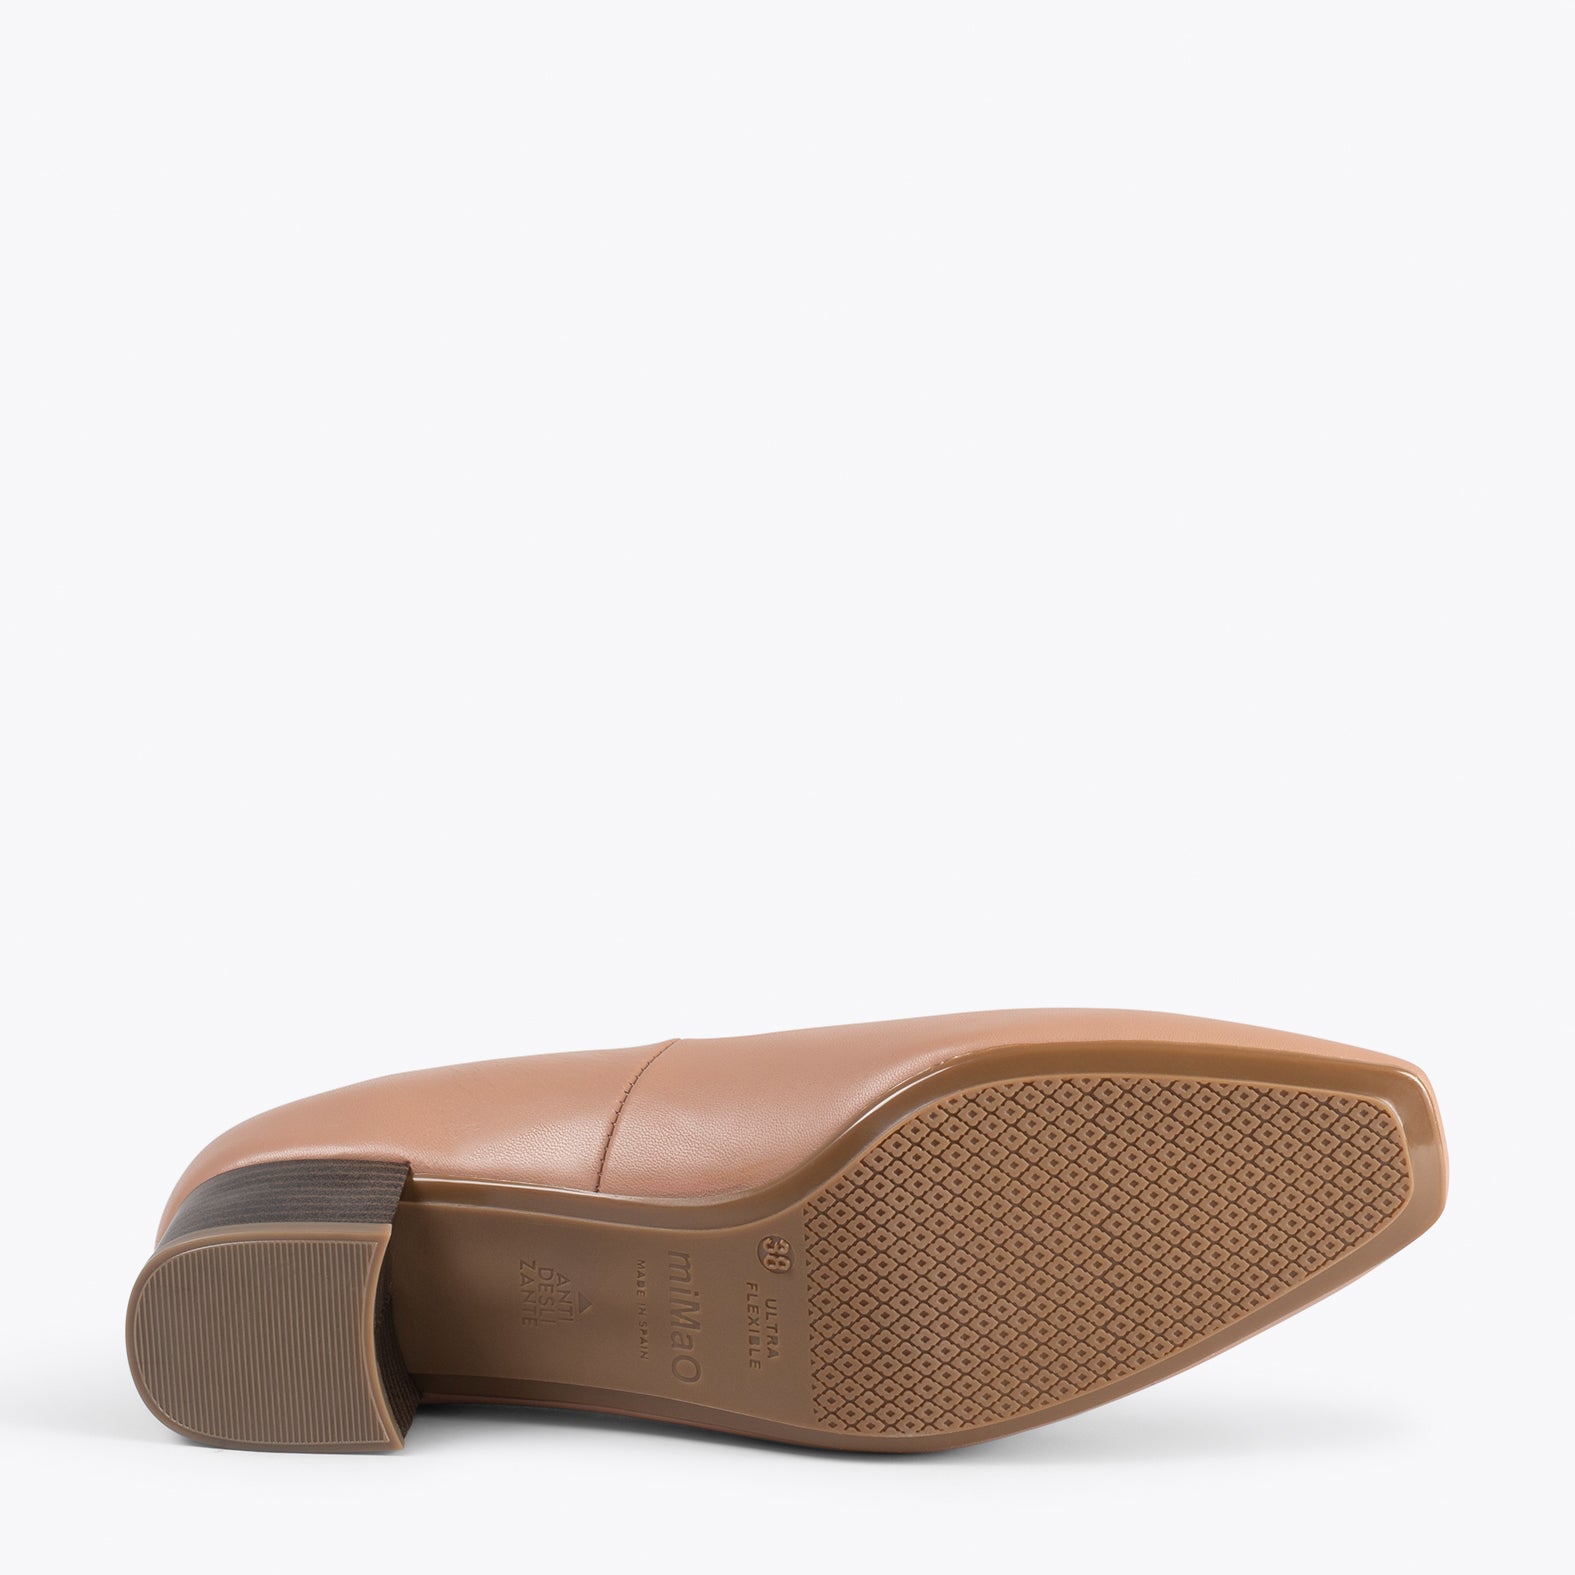 URBAN LADY – Chaussures à talon bas en cuir nappa NUDE